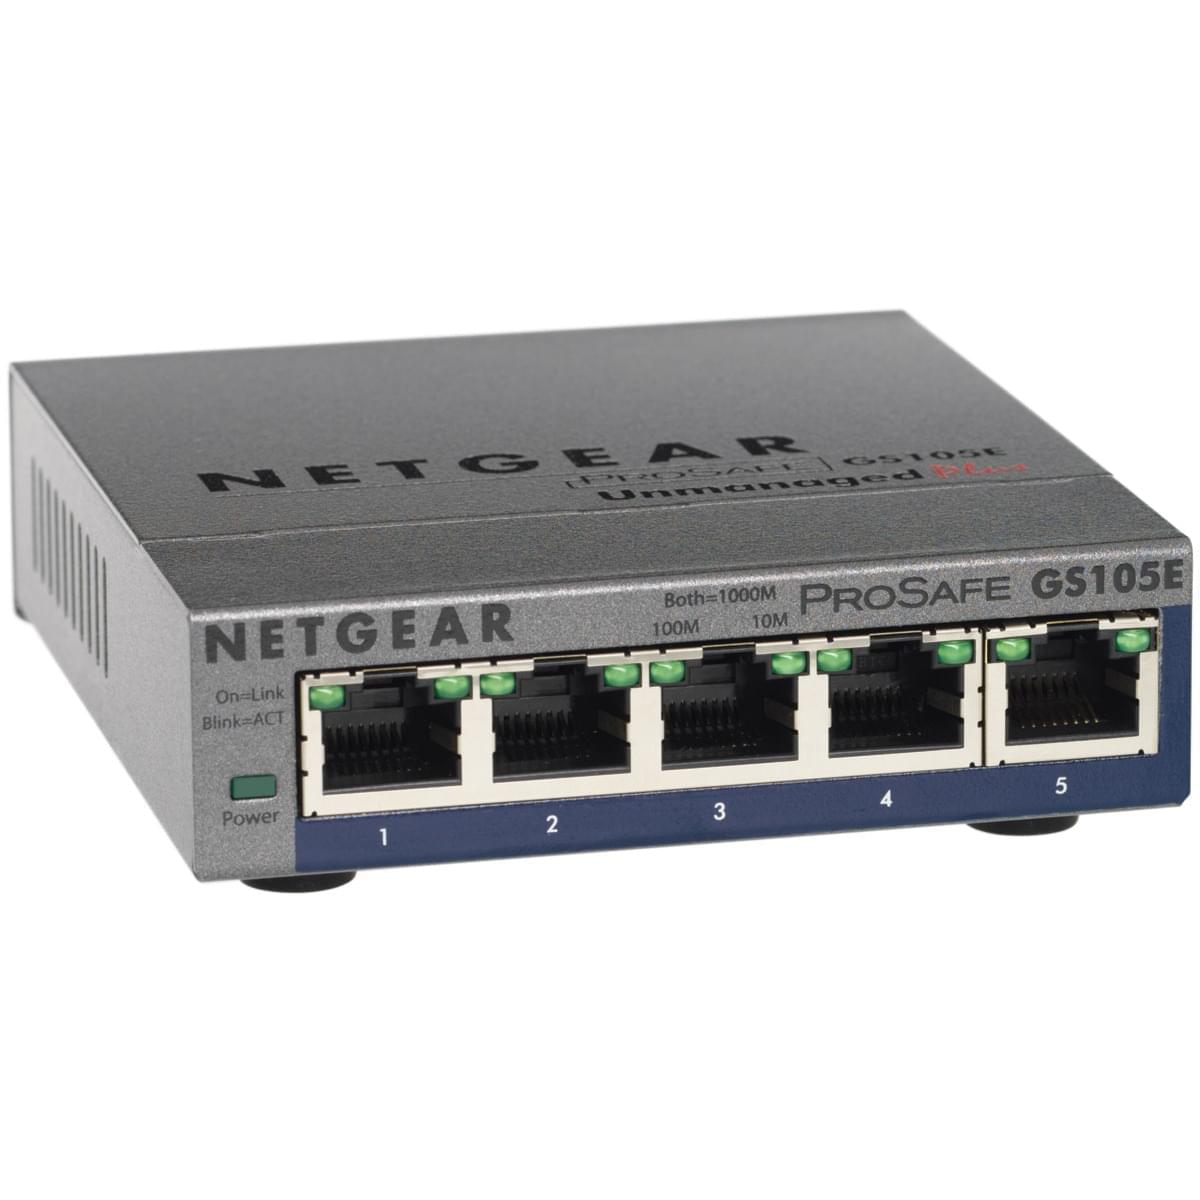 Switch Netgear 5 ports 10/100/1000 GS105E v2#